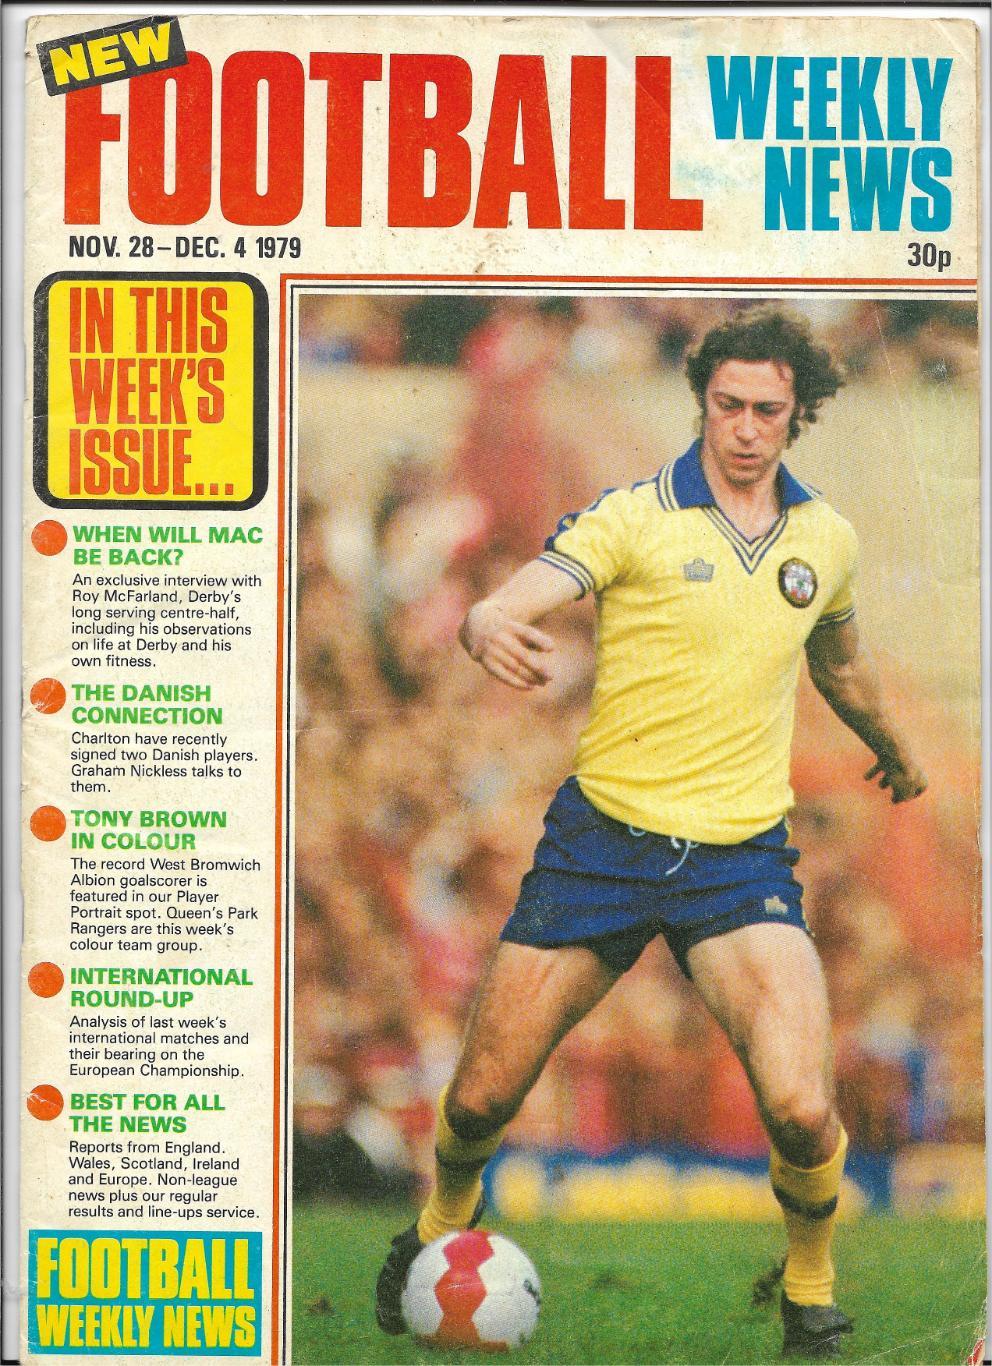 Football_Weekly _News._nov.28-dec.4_1979_ _(England)